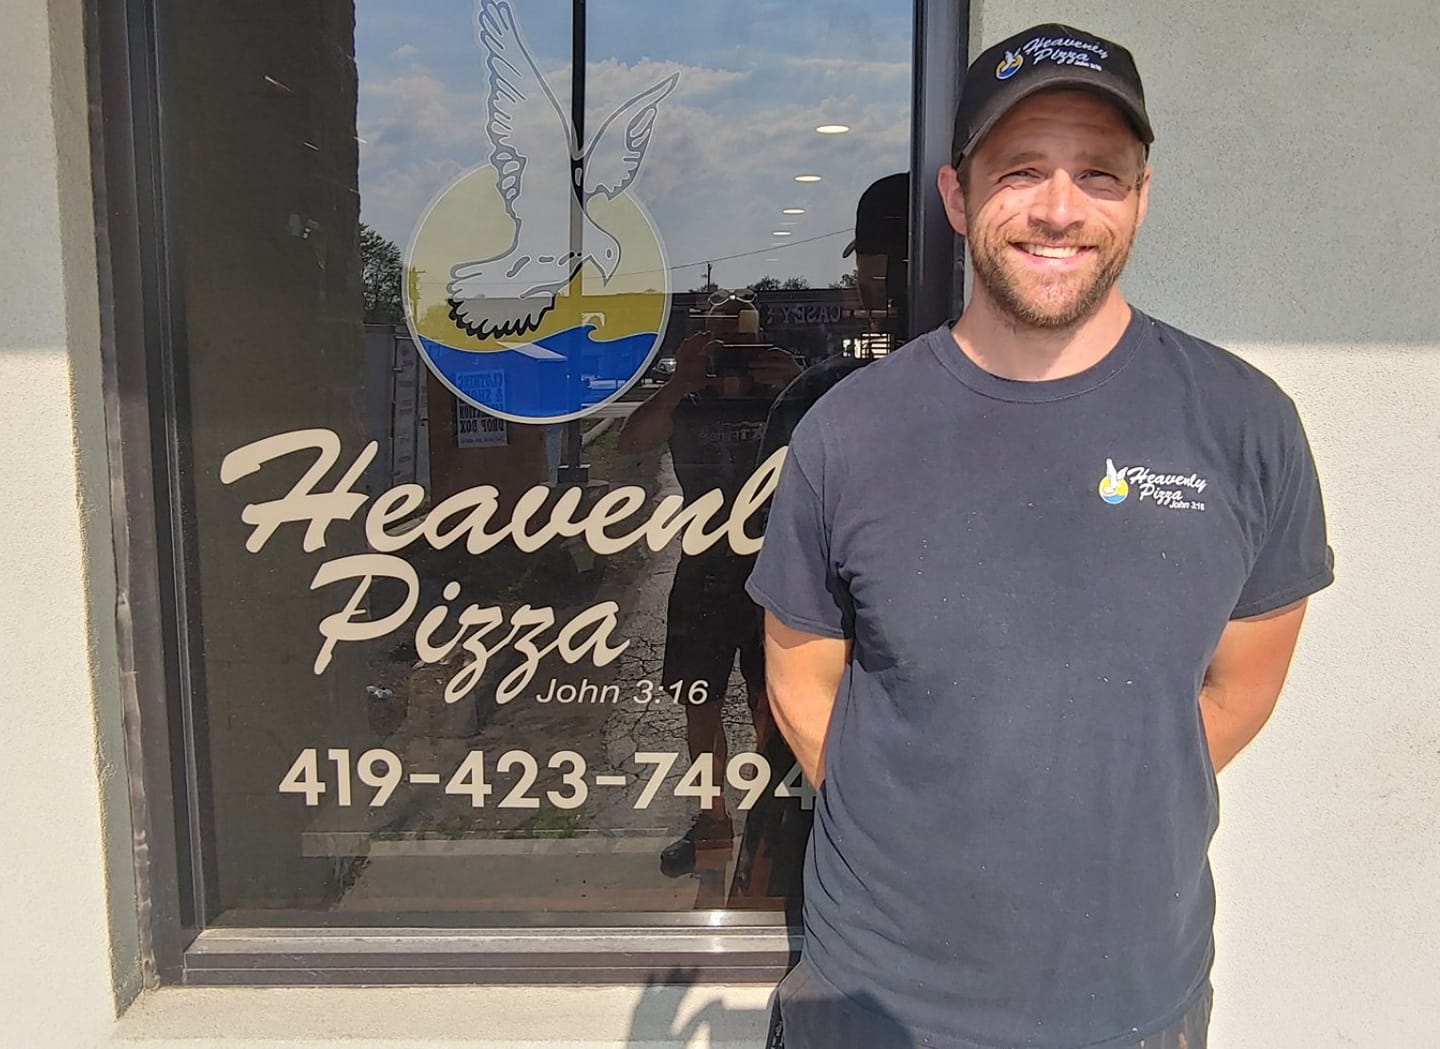 Heavenly Pizza owner Josh Elchert